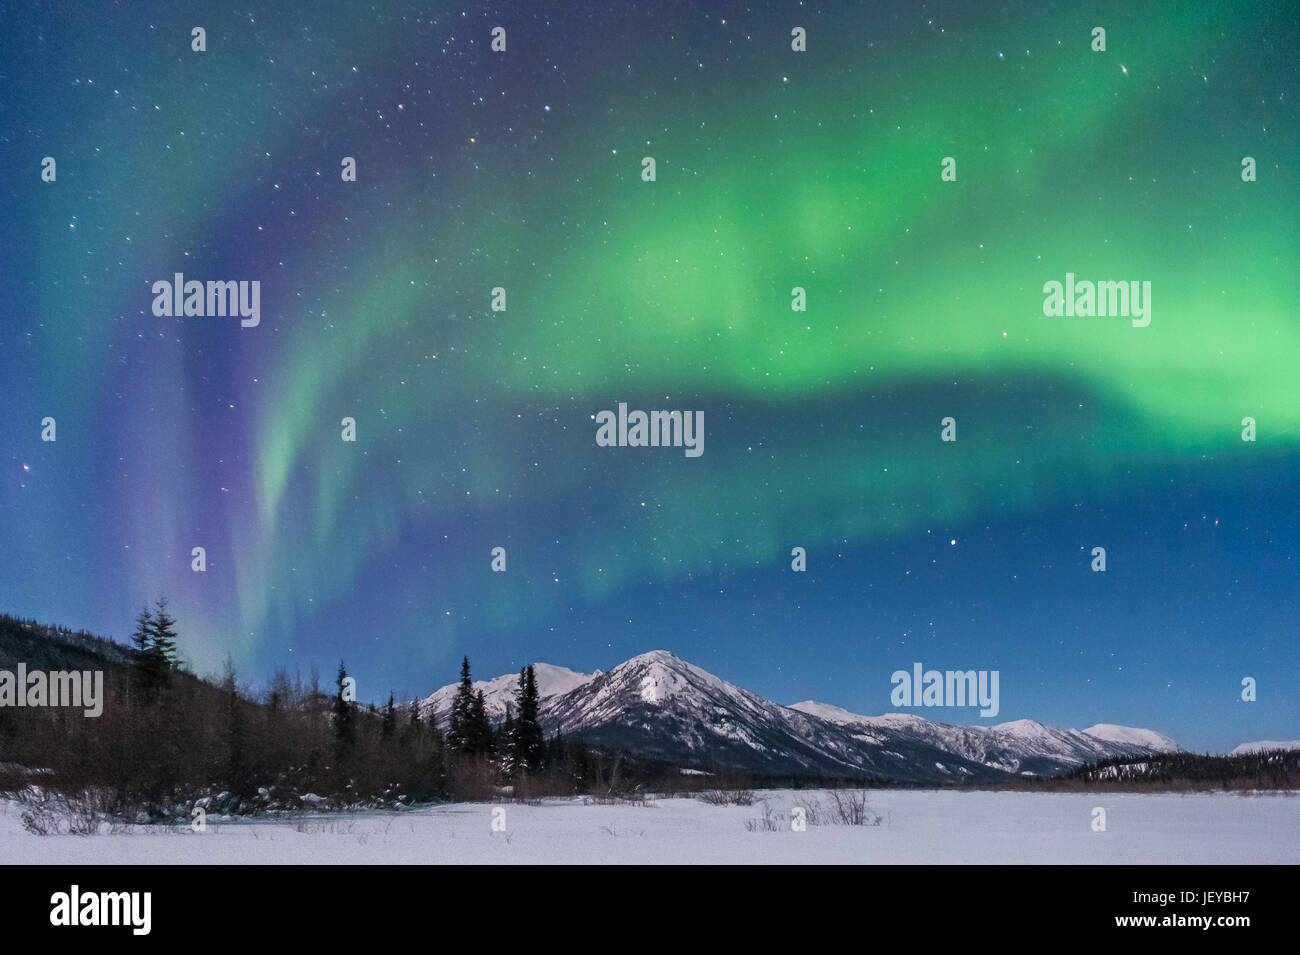 The beautiful Northern Lights photographed at night on the frozen Koyukuk river in Wiseman, Alaska. Stock Photo